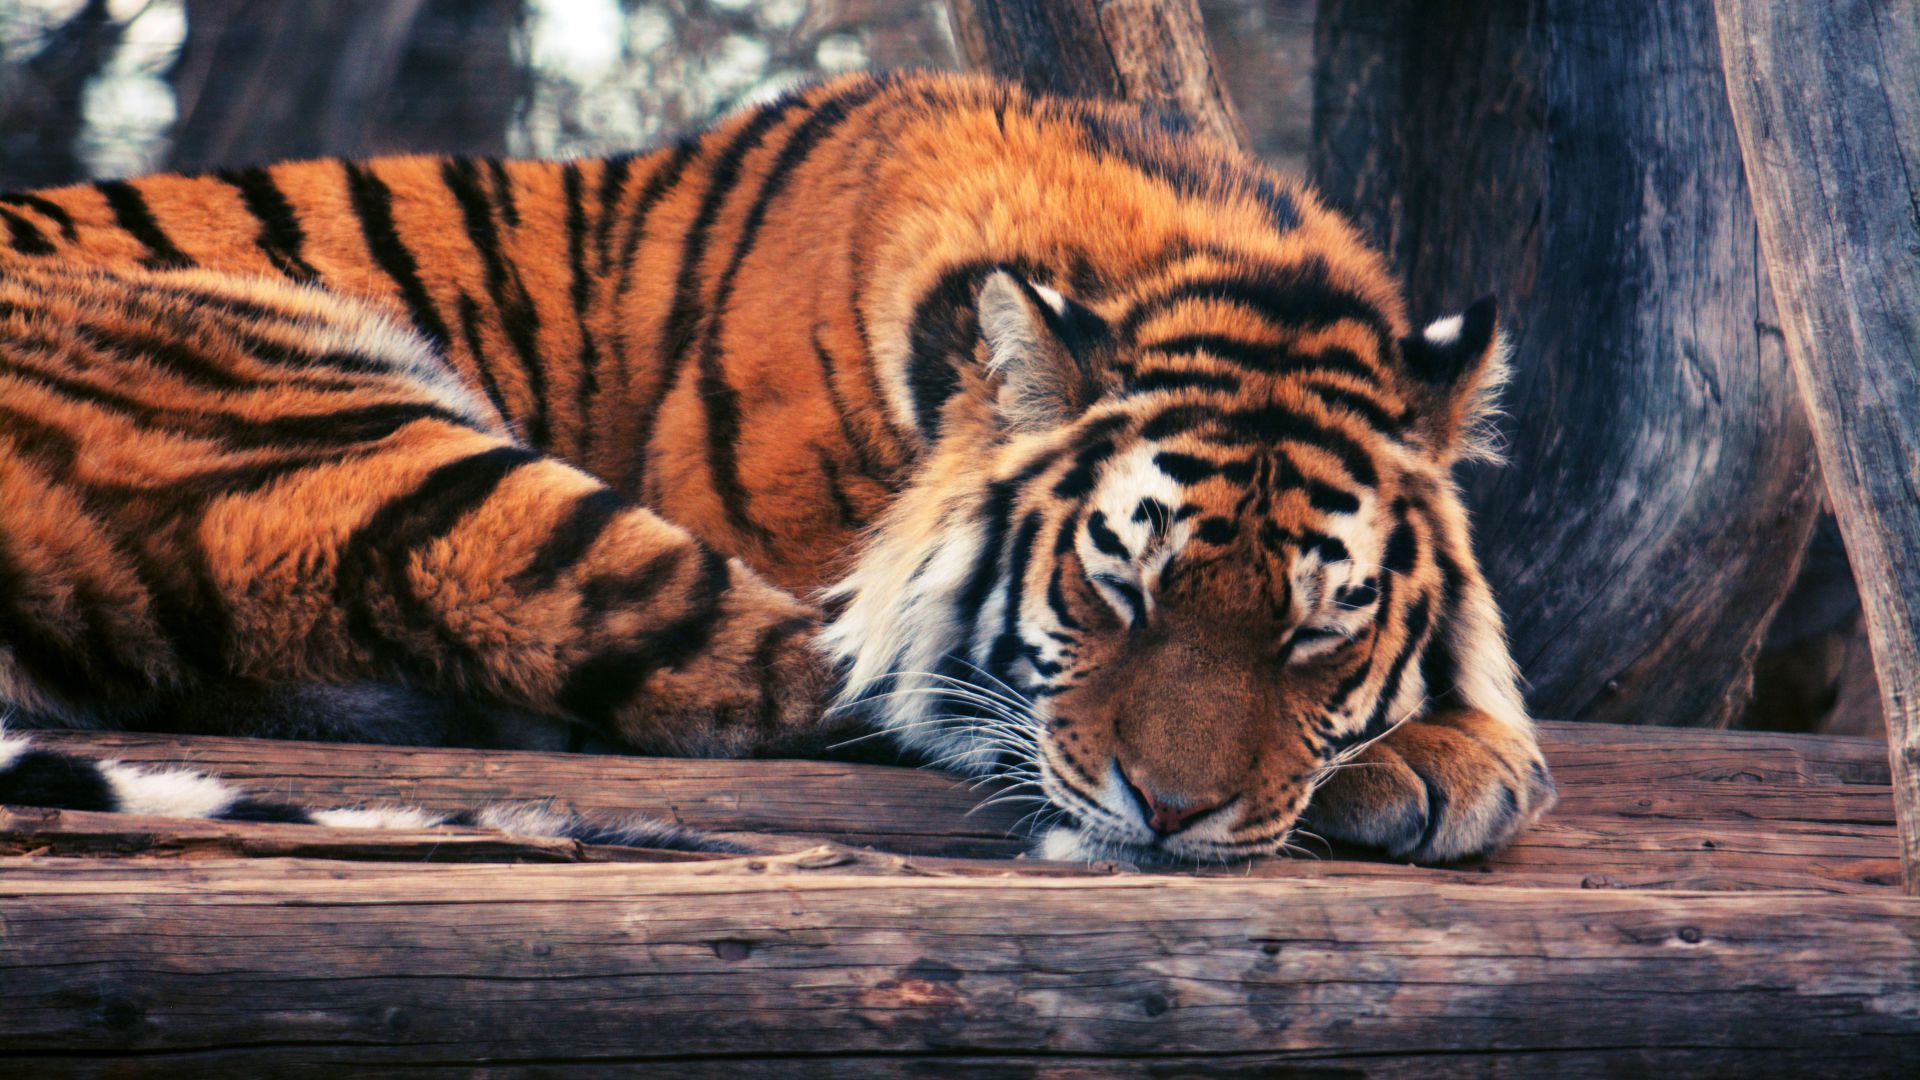 Tiger, cute animals, funny (horizontal)